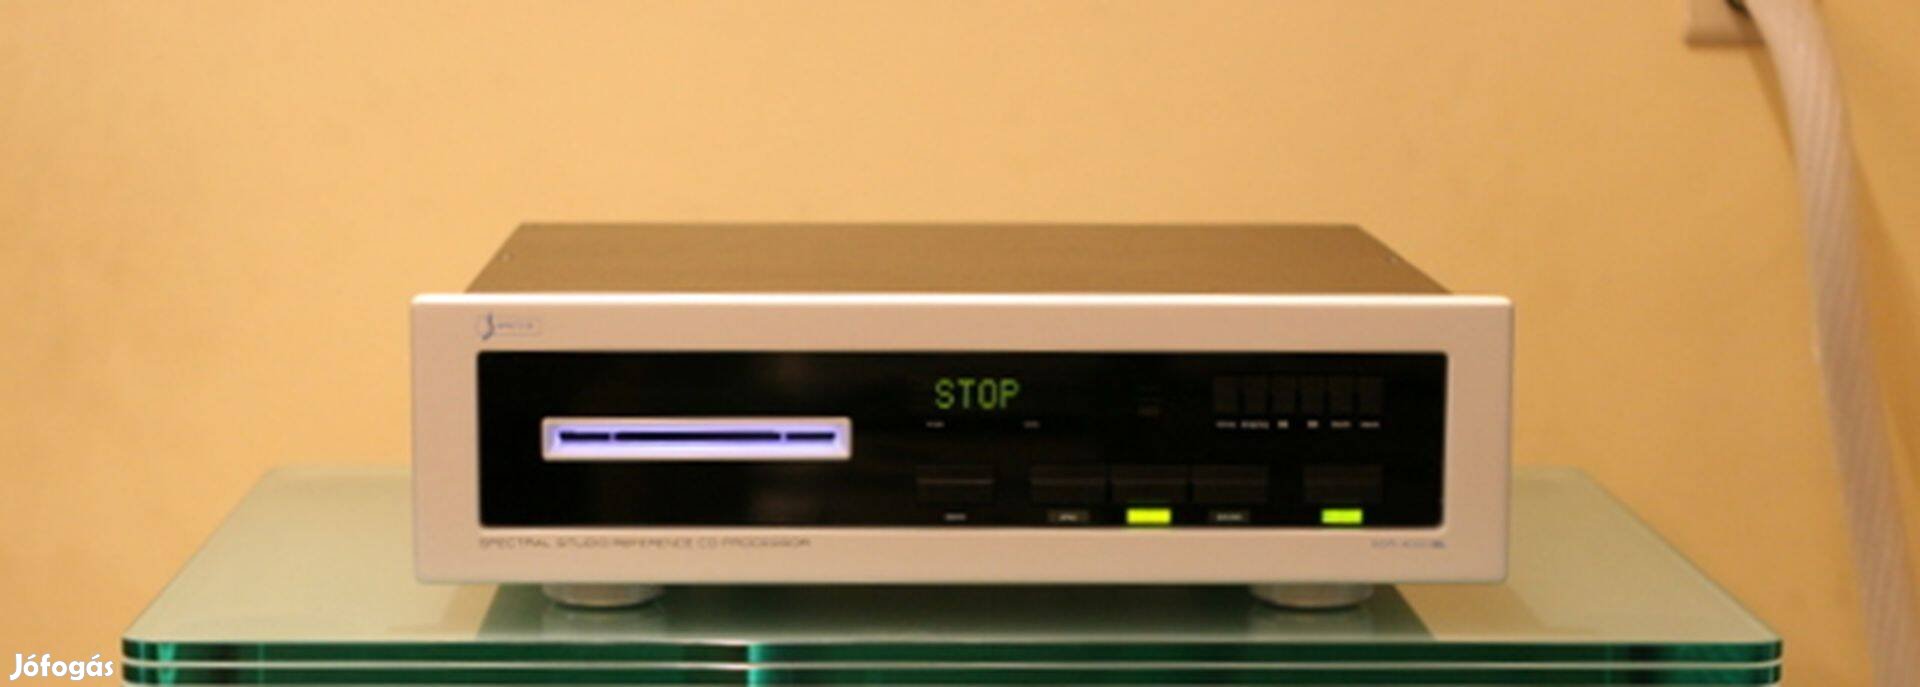 Spectral Audio SDR4000SL